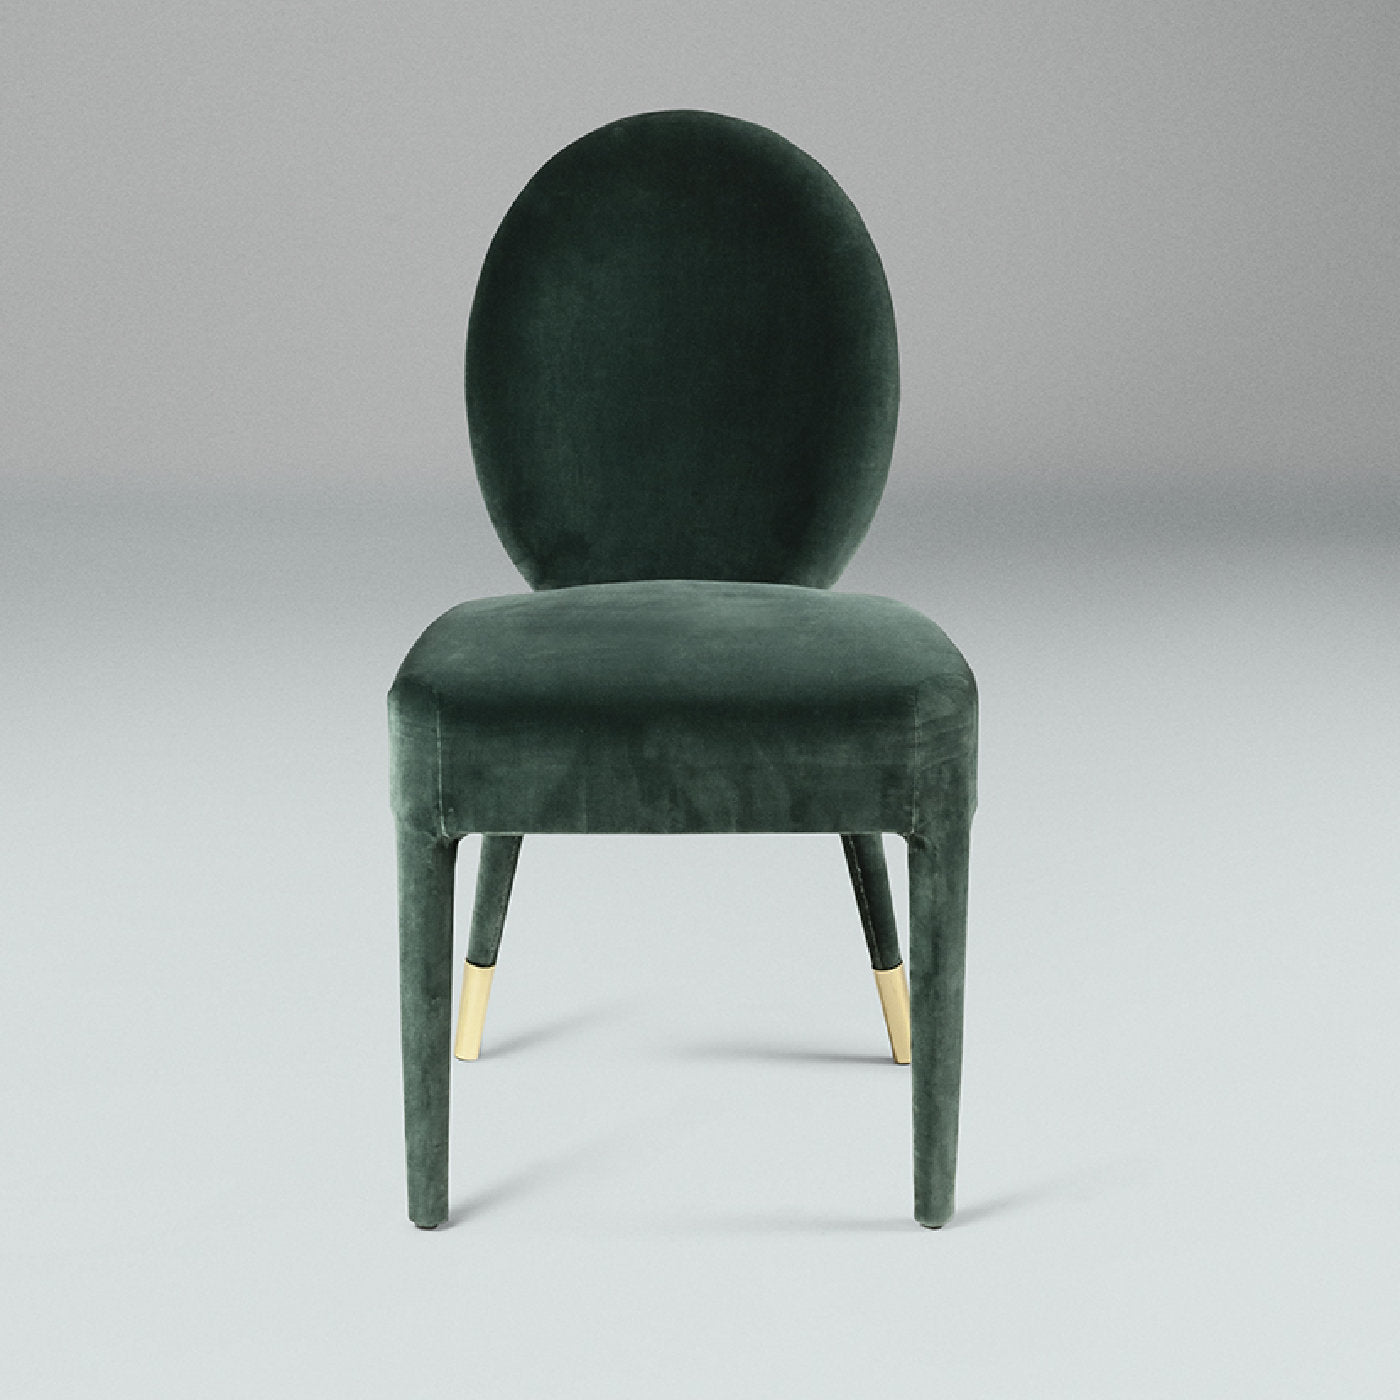 Sofia Green Chair - Alternative view 1